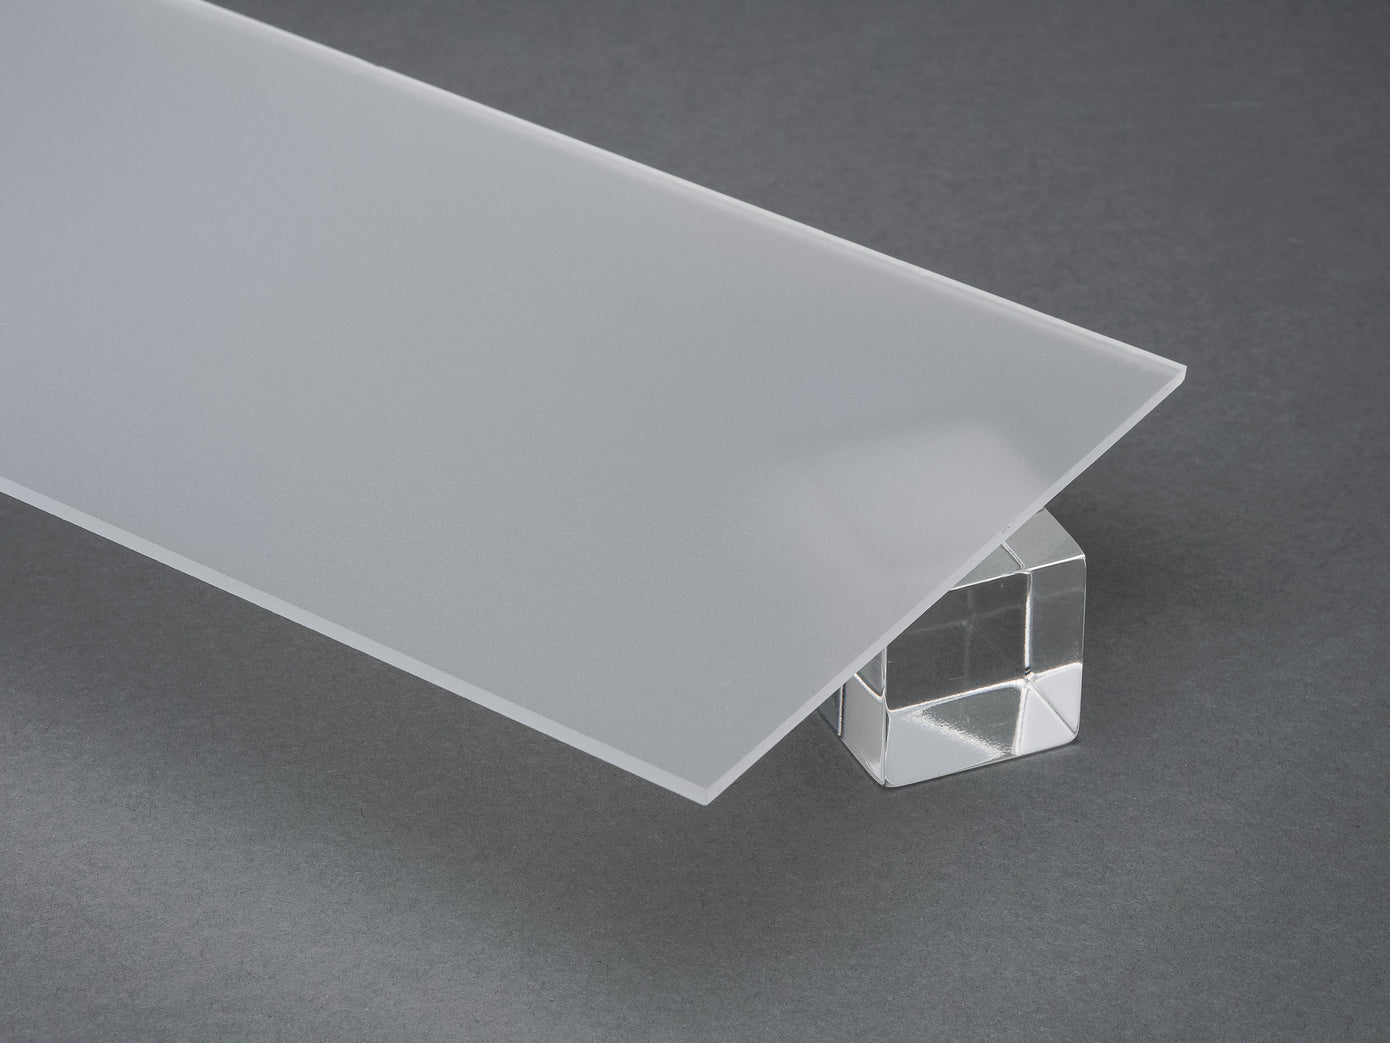 Plexiglas transparent 6 mm